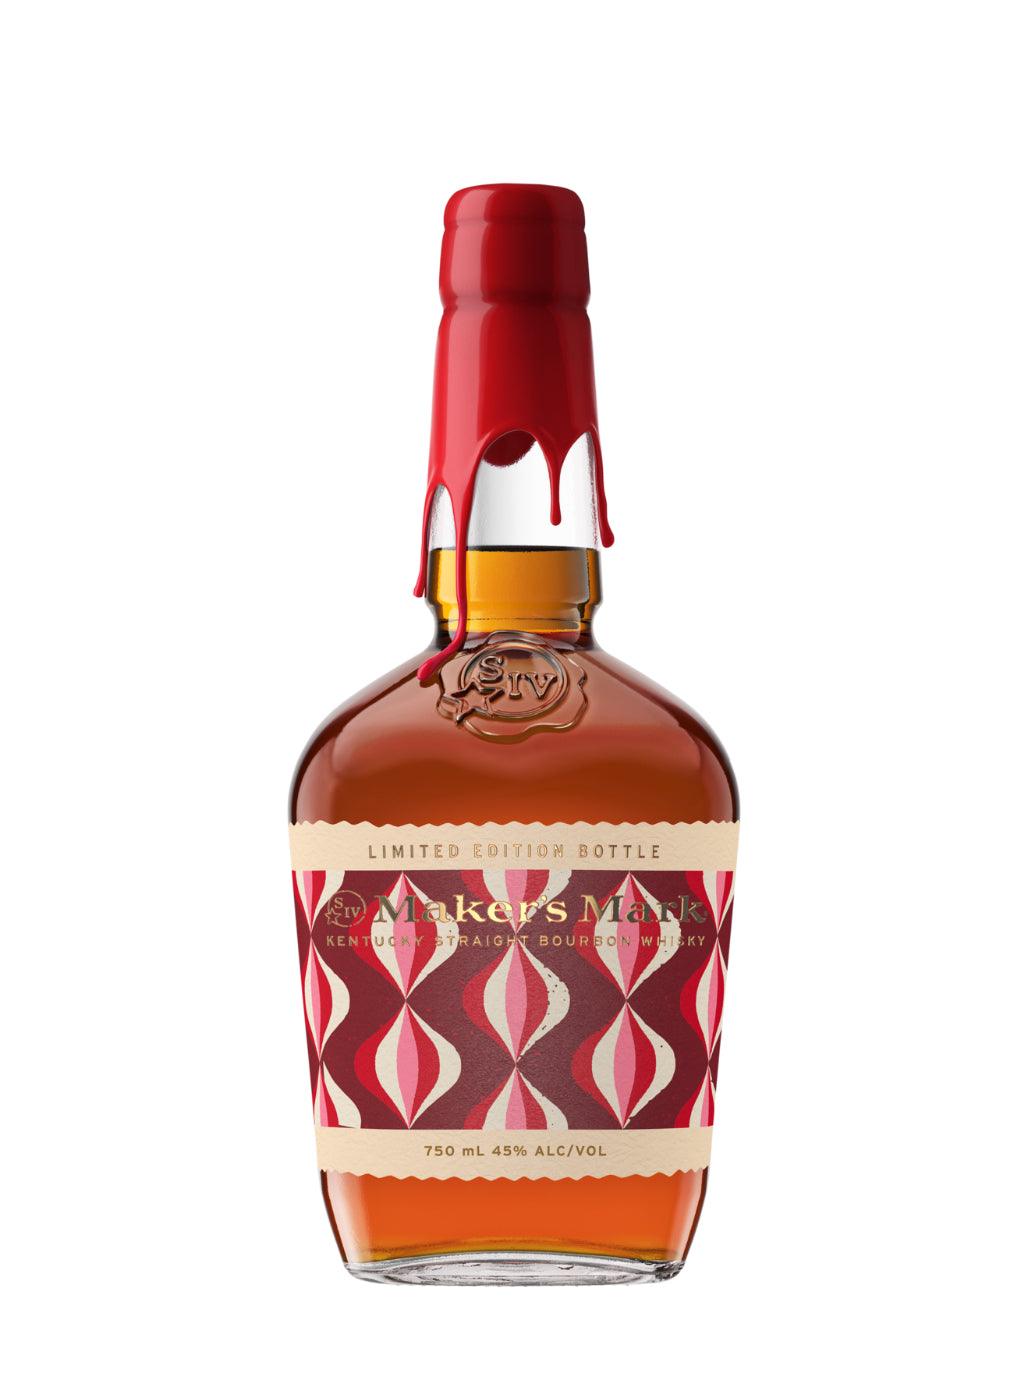 Maker's Mark Kentucky Straight Bourbon Whisky Holiday 2021 Limited Edition Bottle - Liquor Luxe